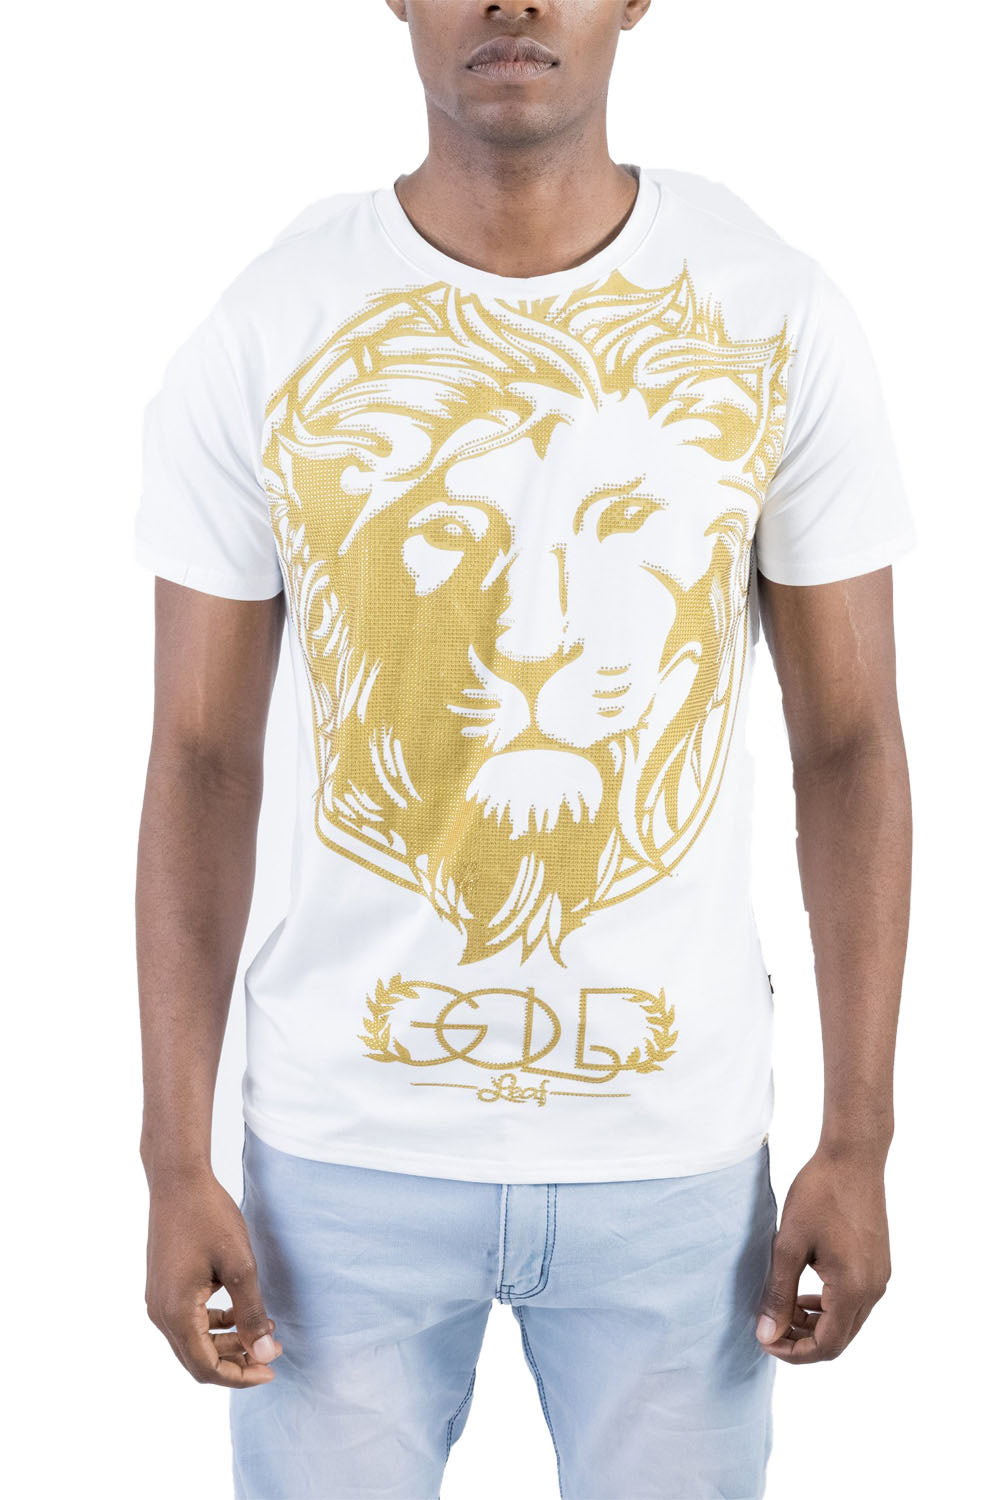 BARABAS Men's Printed Lion Graphic T-shirt TR522 White gold